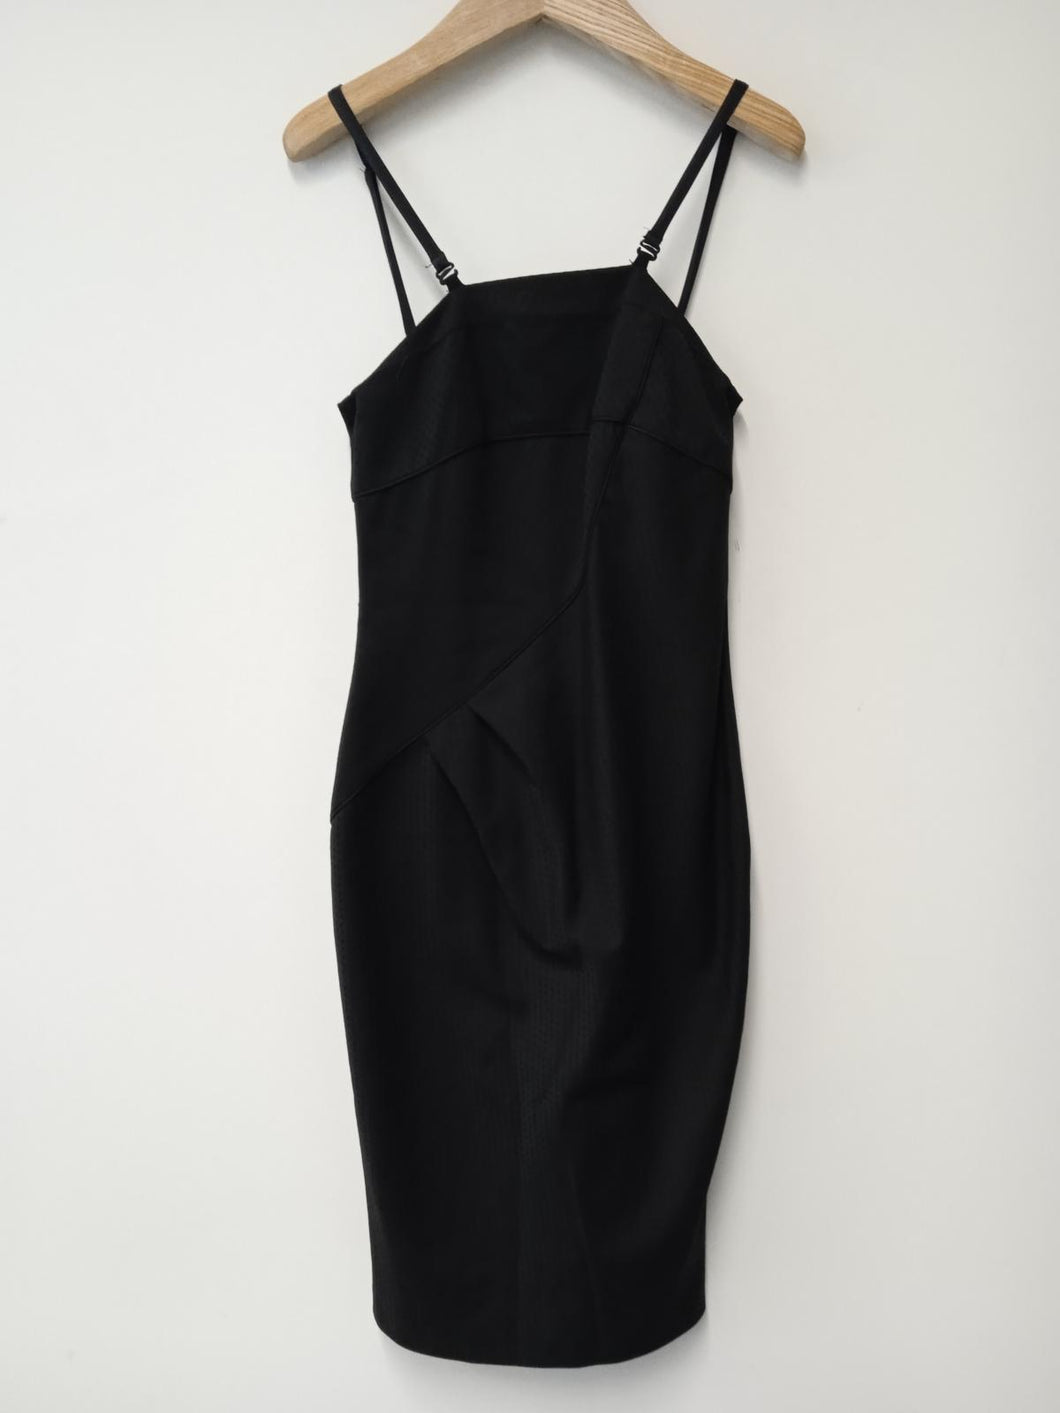 MARKS & SPENCER Ladies Black Sleeveless Square Neck Dress Size UK8